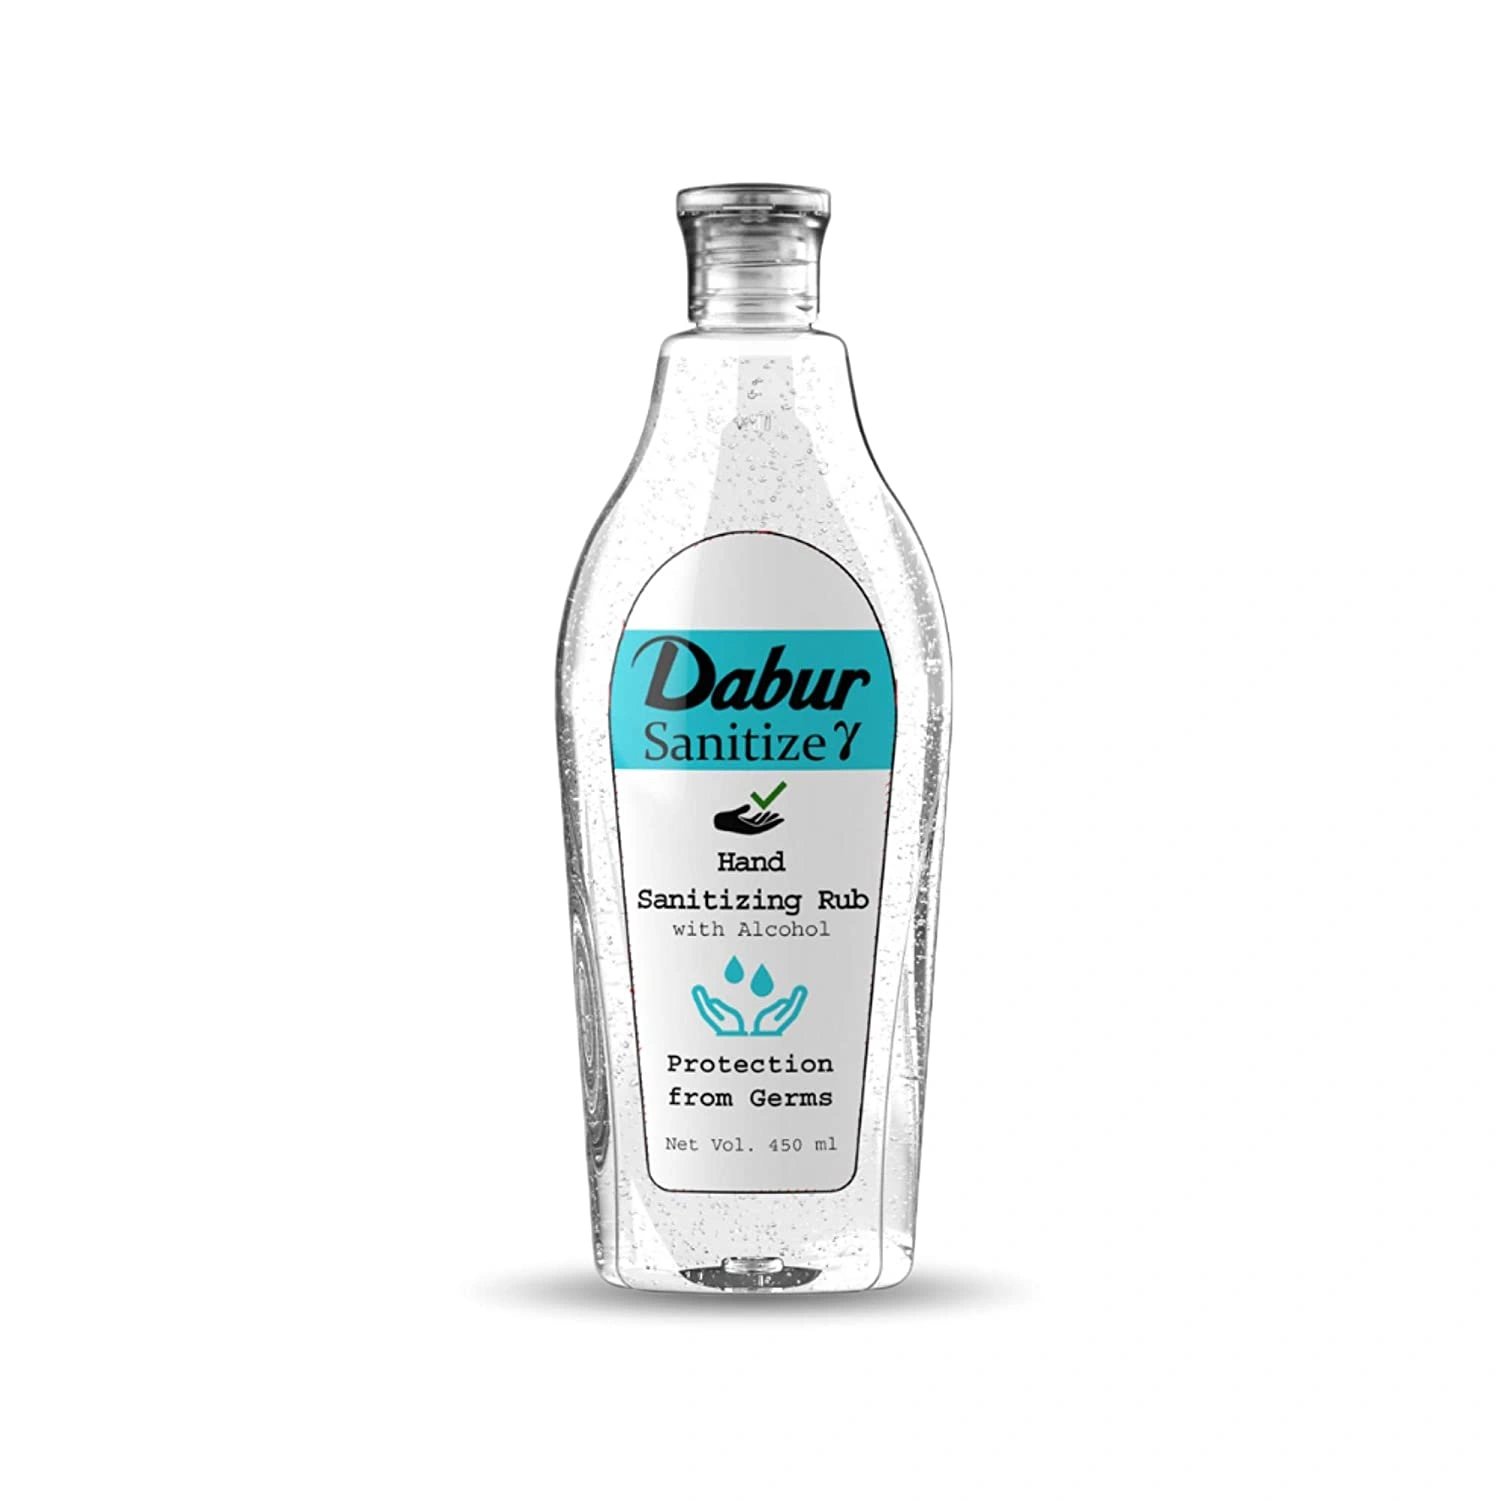 Dabur Sanitize γ - Hand Sanitizer | Alcohol Based Sanitizer - 450 ml-D1017